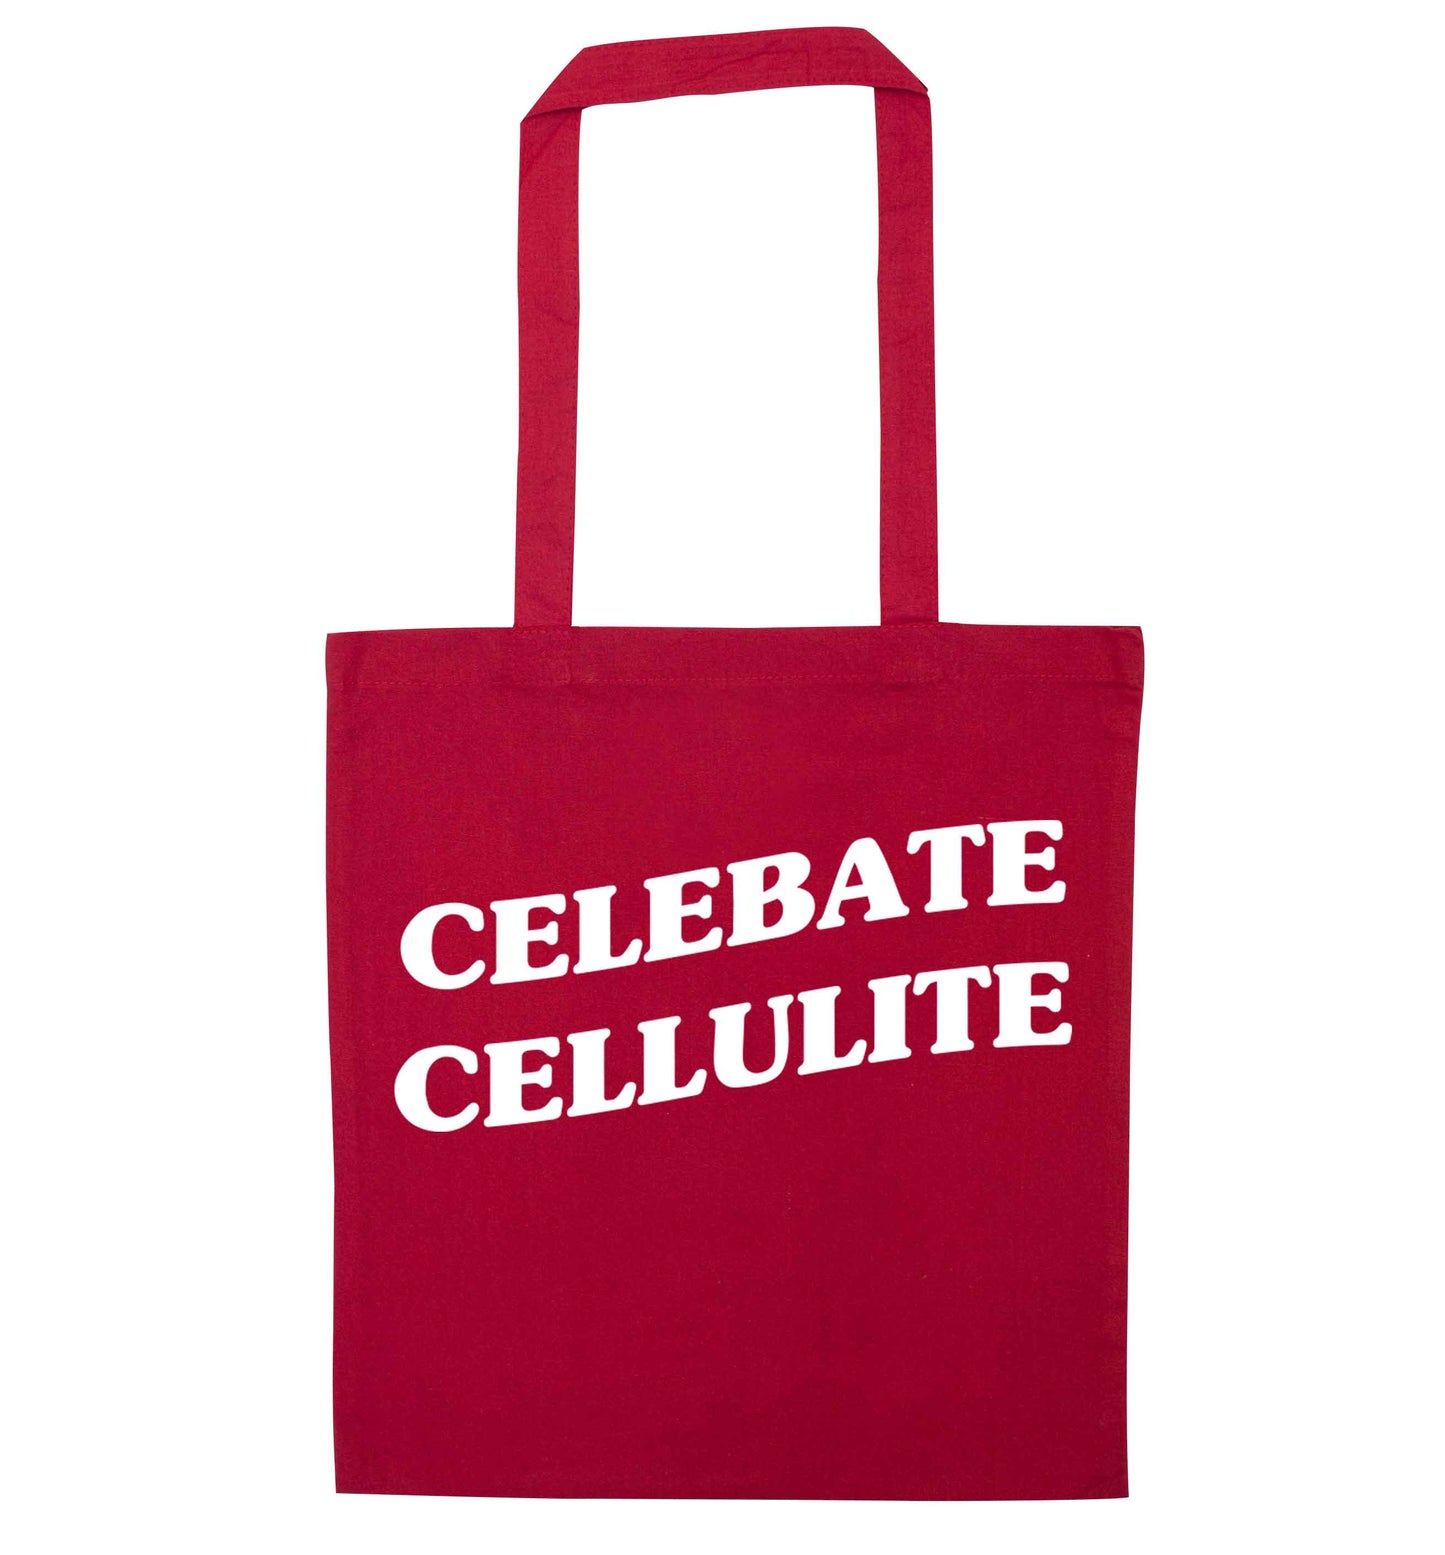 Celebrate cellulite red tote bag